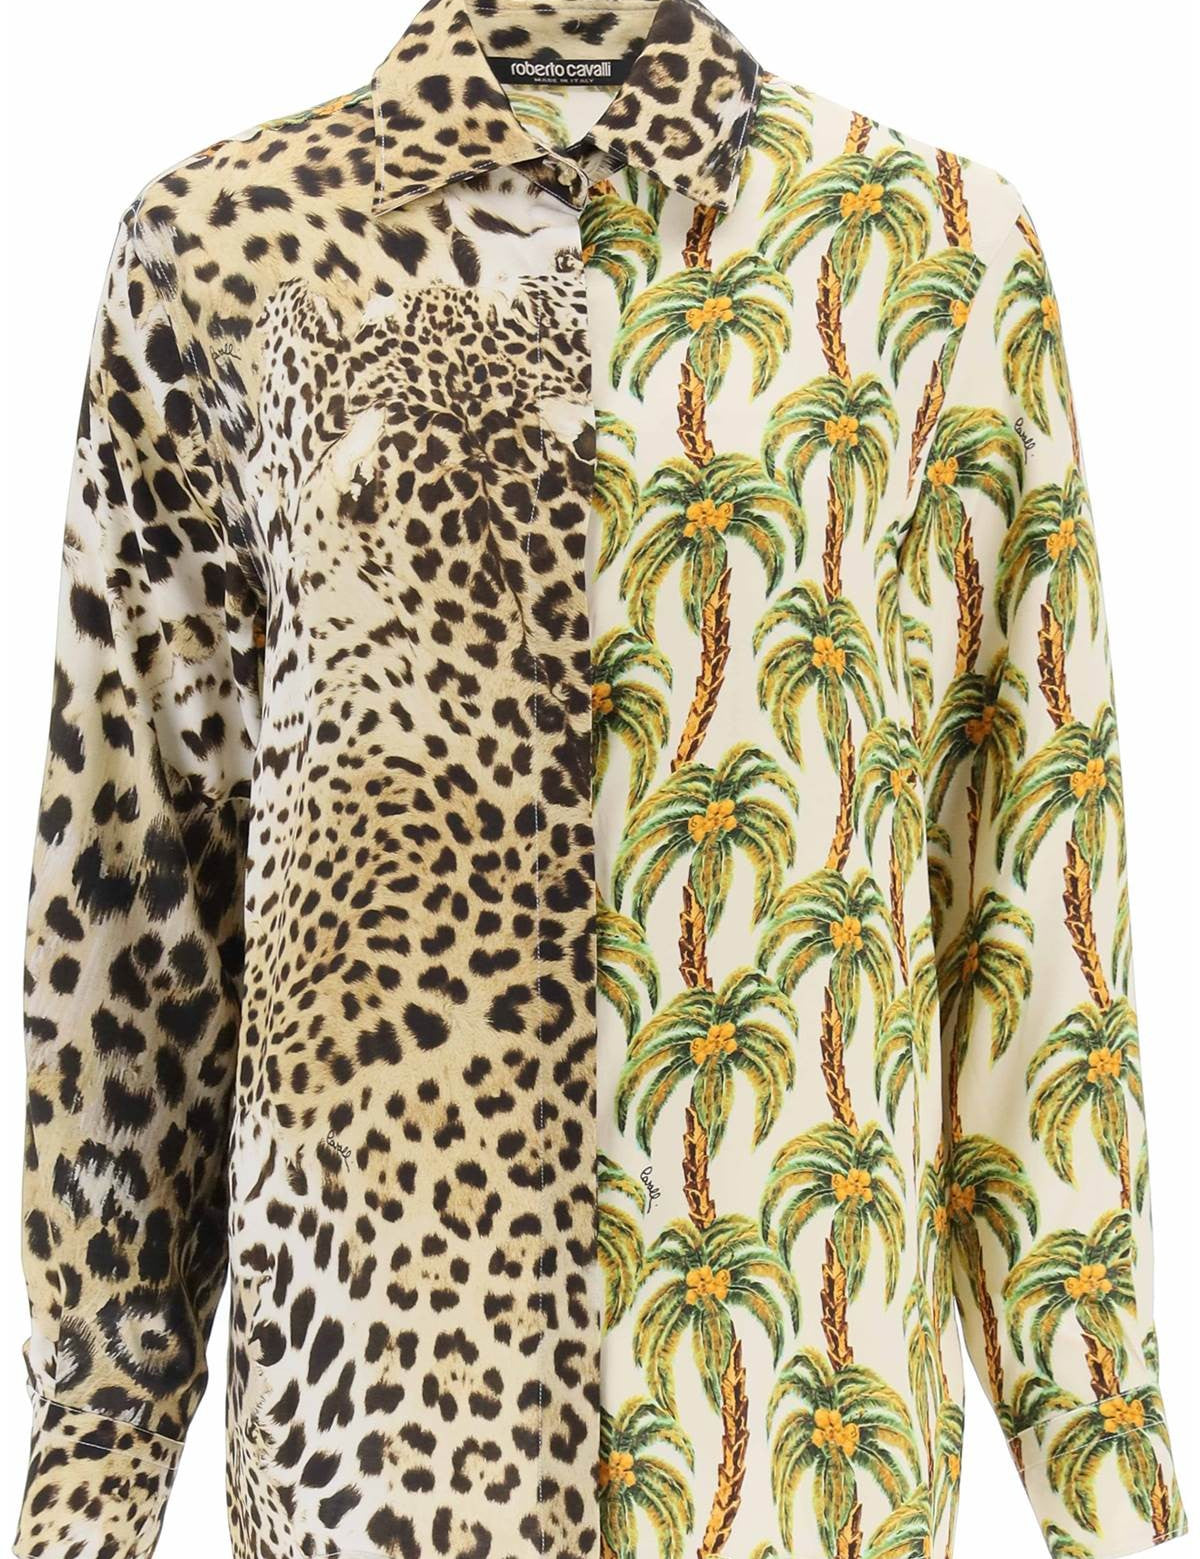 roberto-cavalli-jaguar-and-palm-tree-printed-shirt.jpg